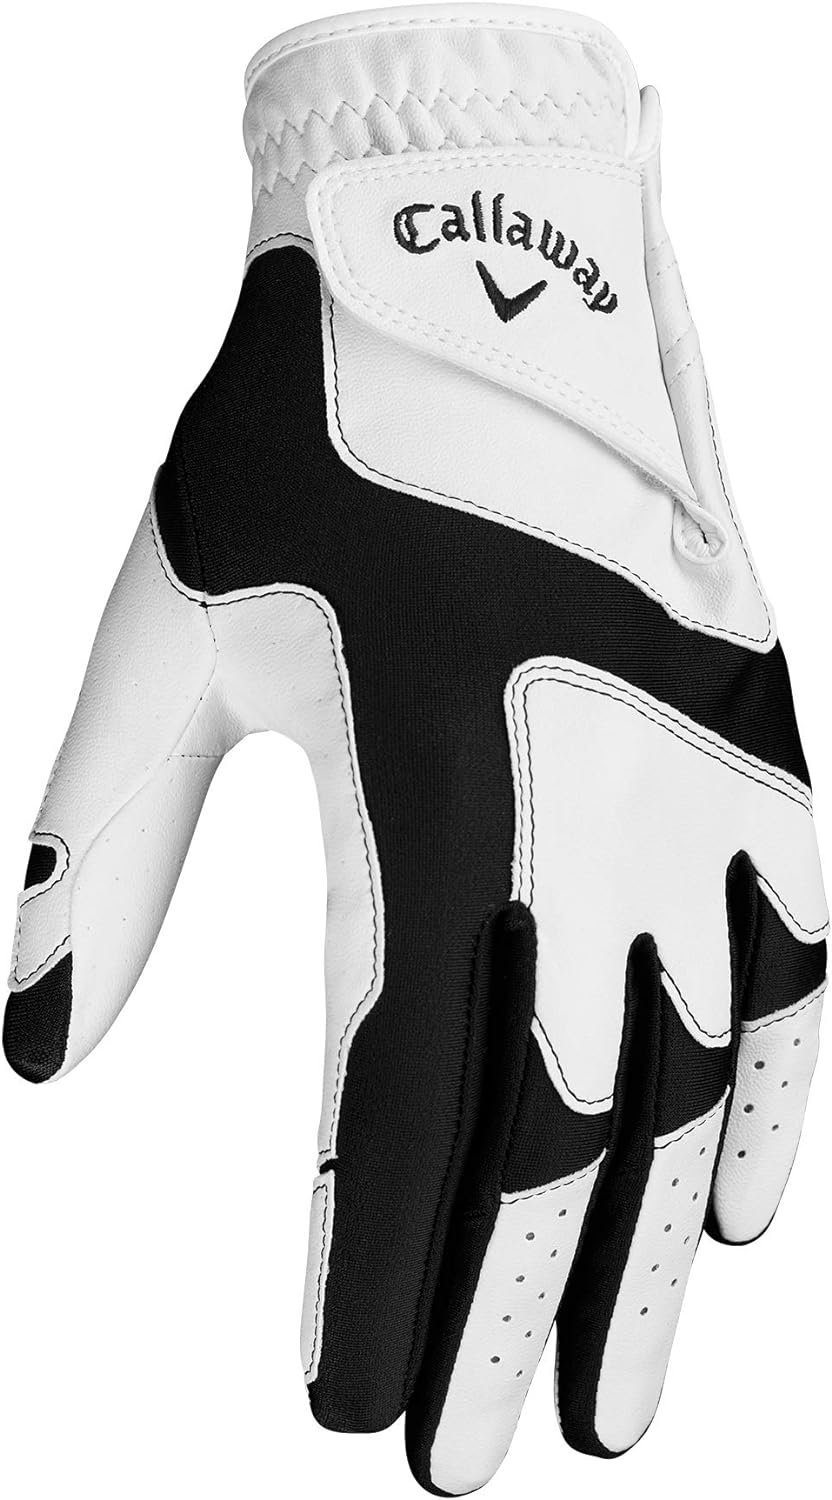 Callaway Golf Opti Fit Seamless Universal Fit Golf Glove